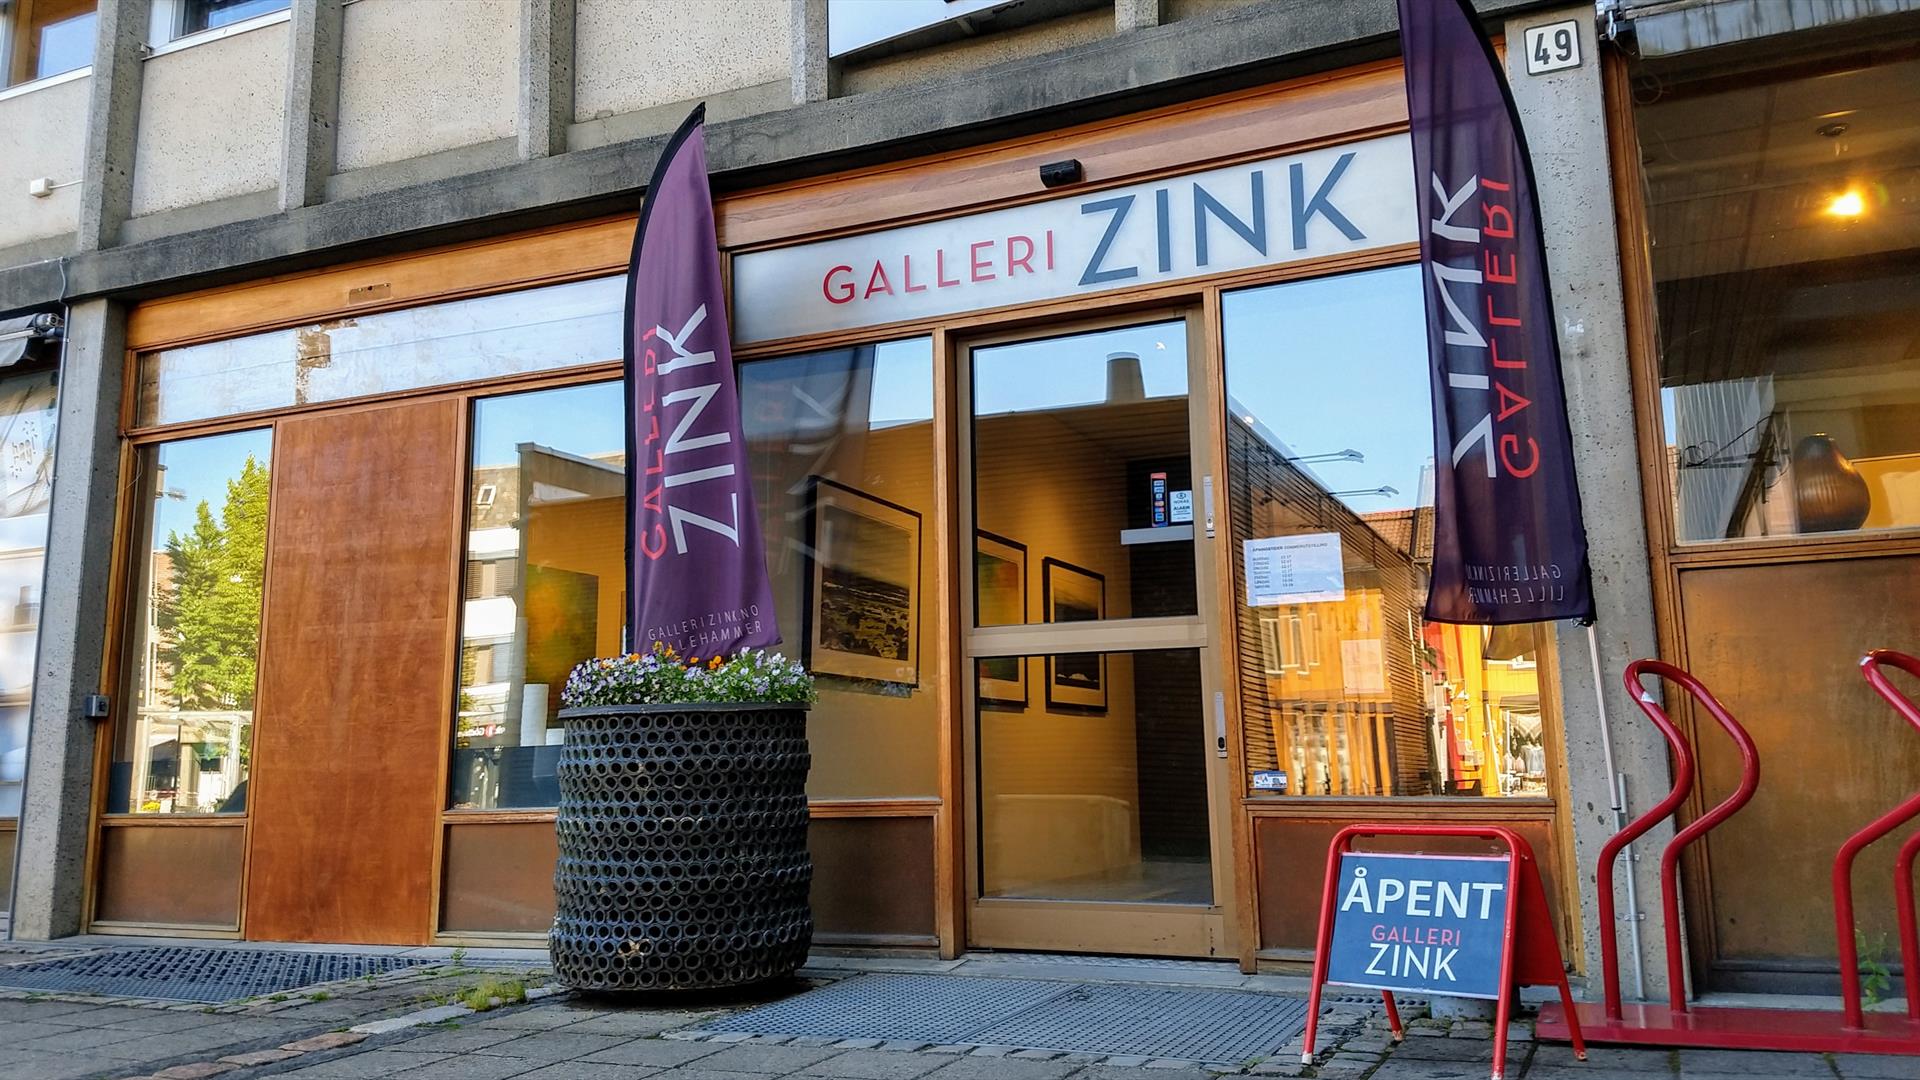 The entrance - Galleri Zink